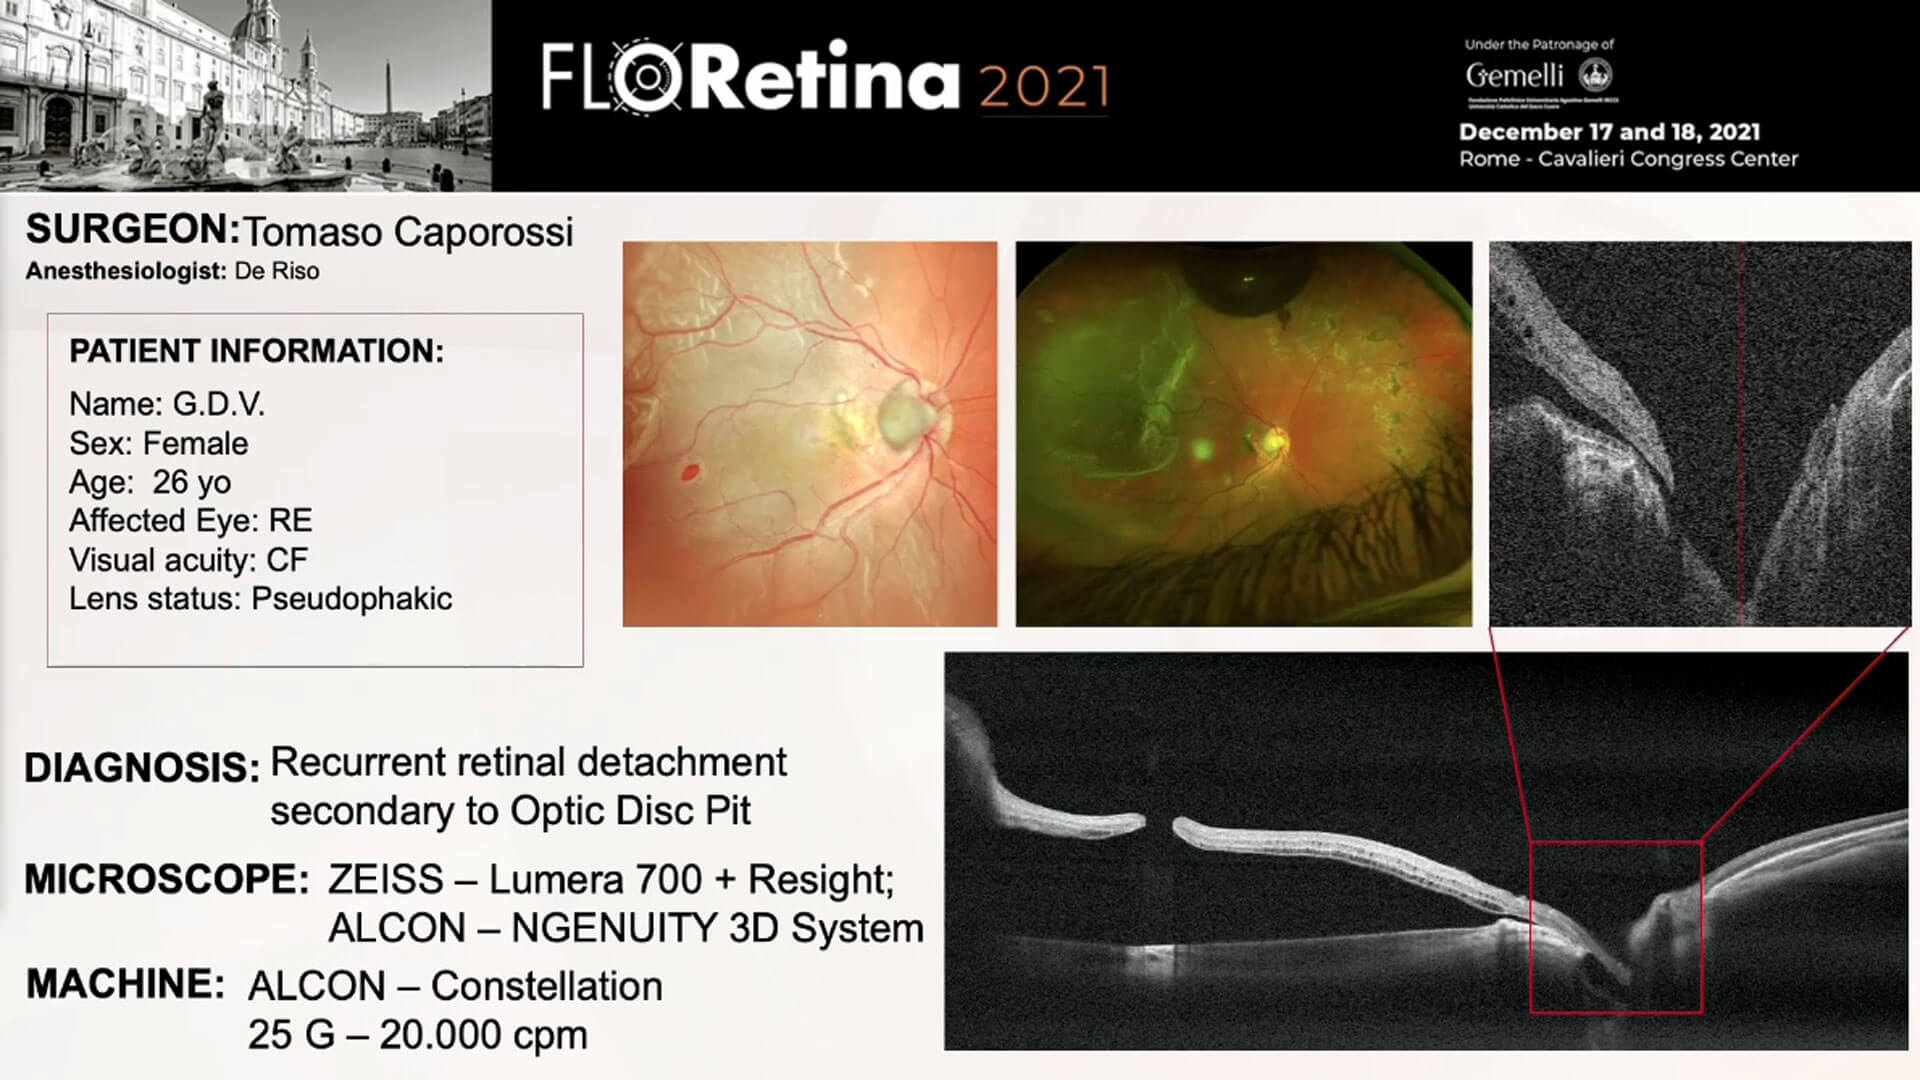 Recurrent retinal detachment secondary to Optic Disc Pit